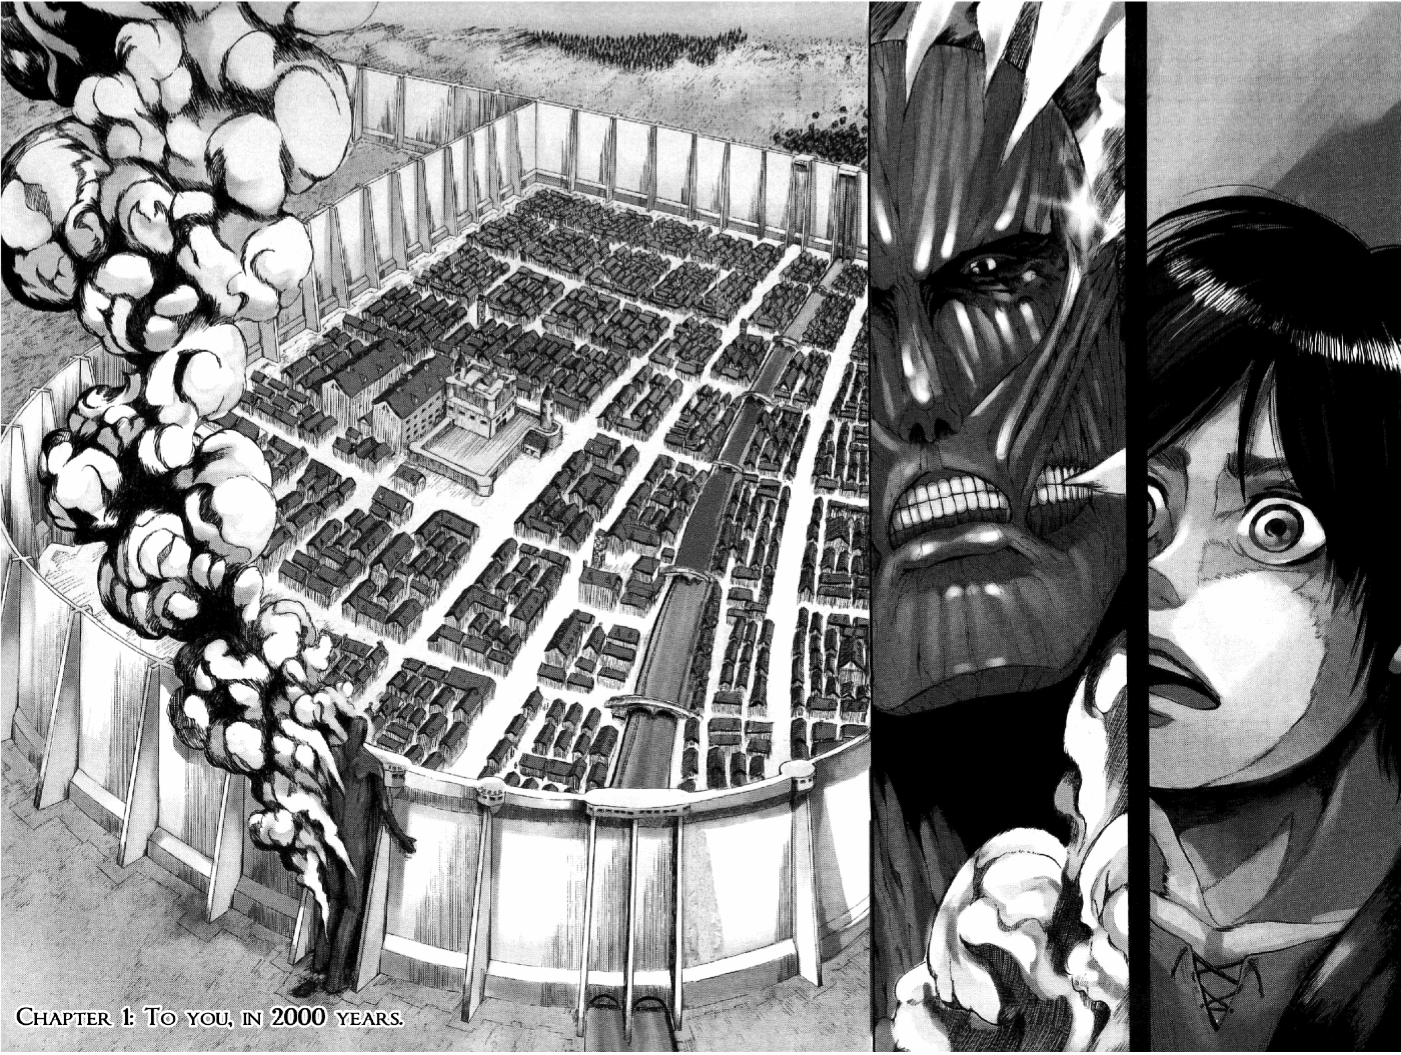 Ataque Dos Titãs - Shingeki no Kyojin - Vol. 32 [Mangá: Panini]